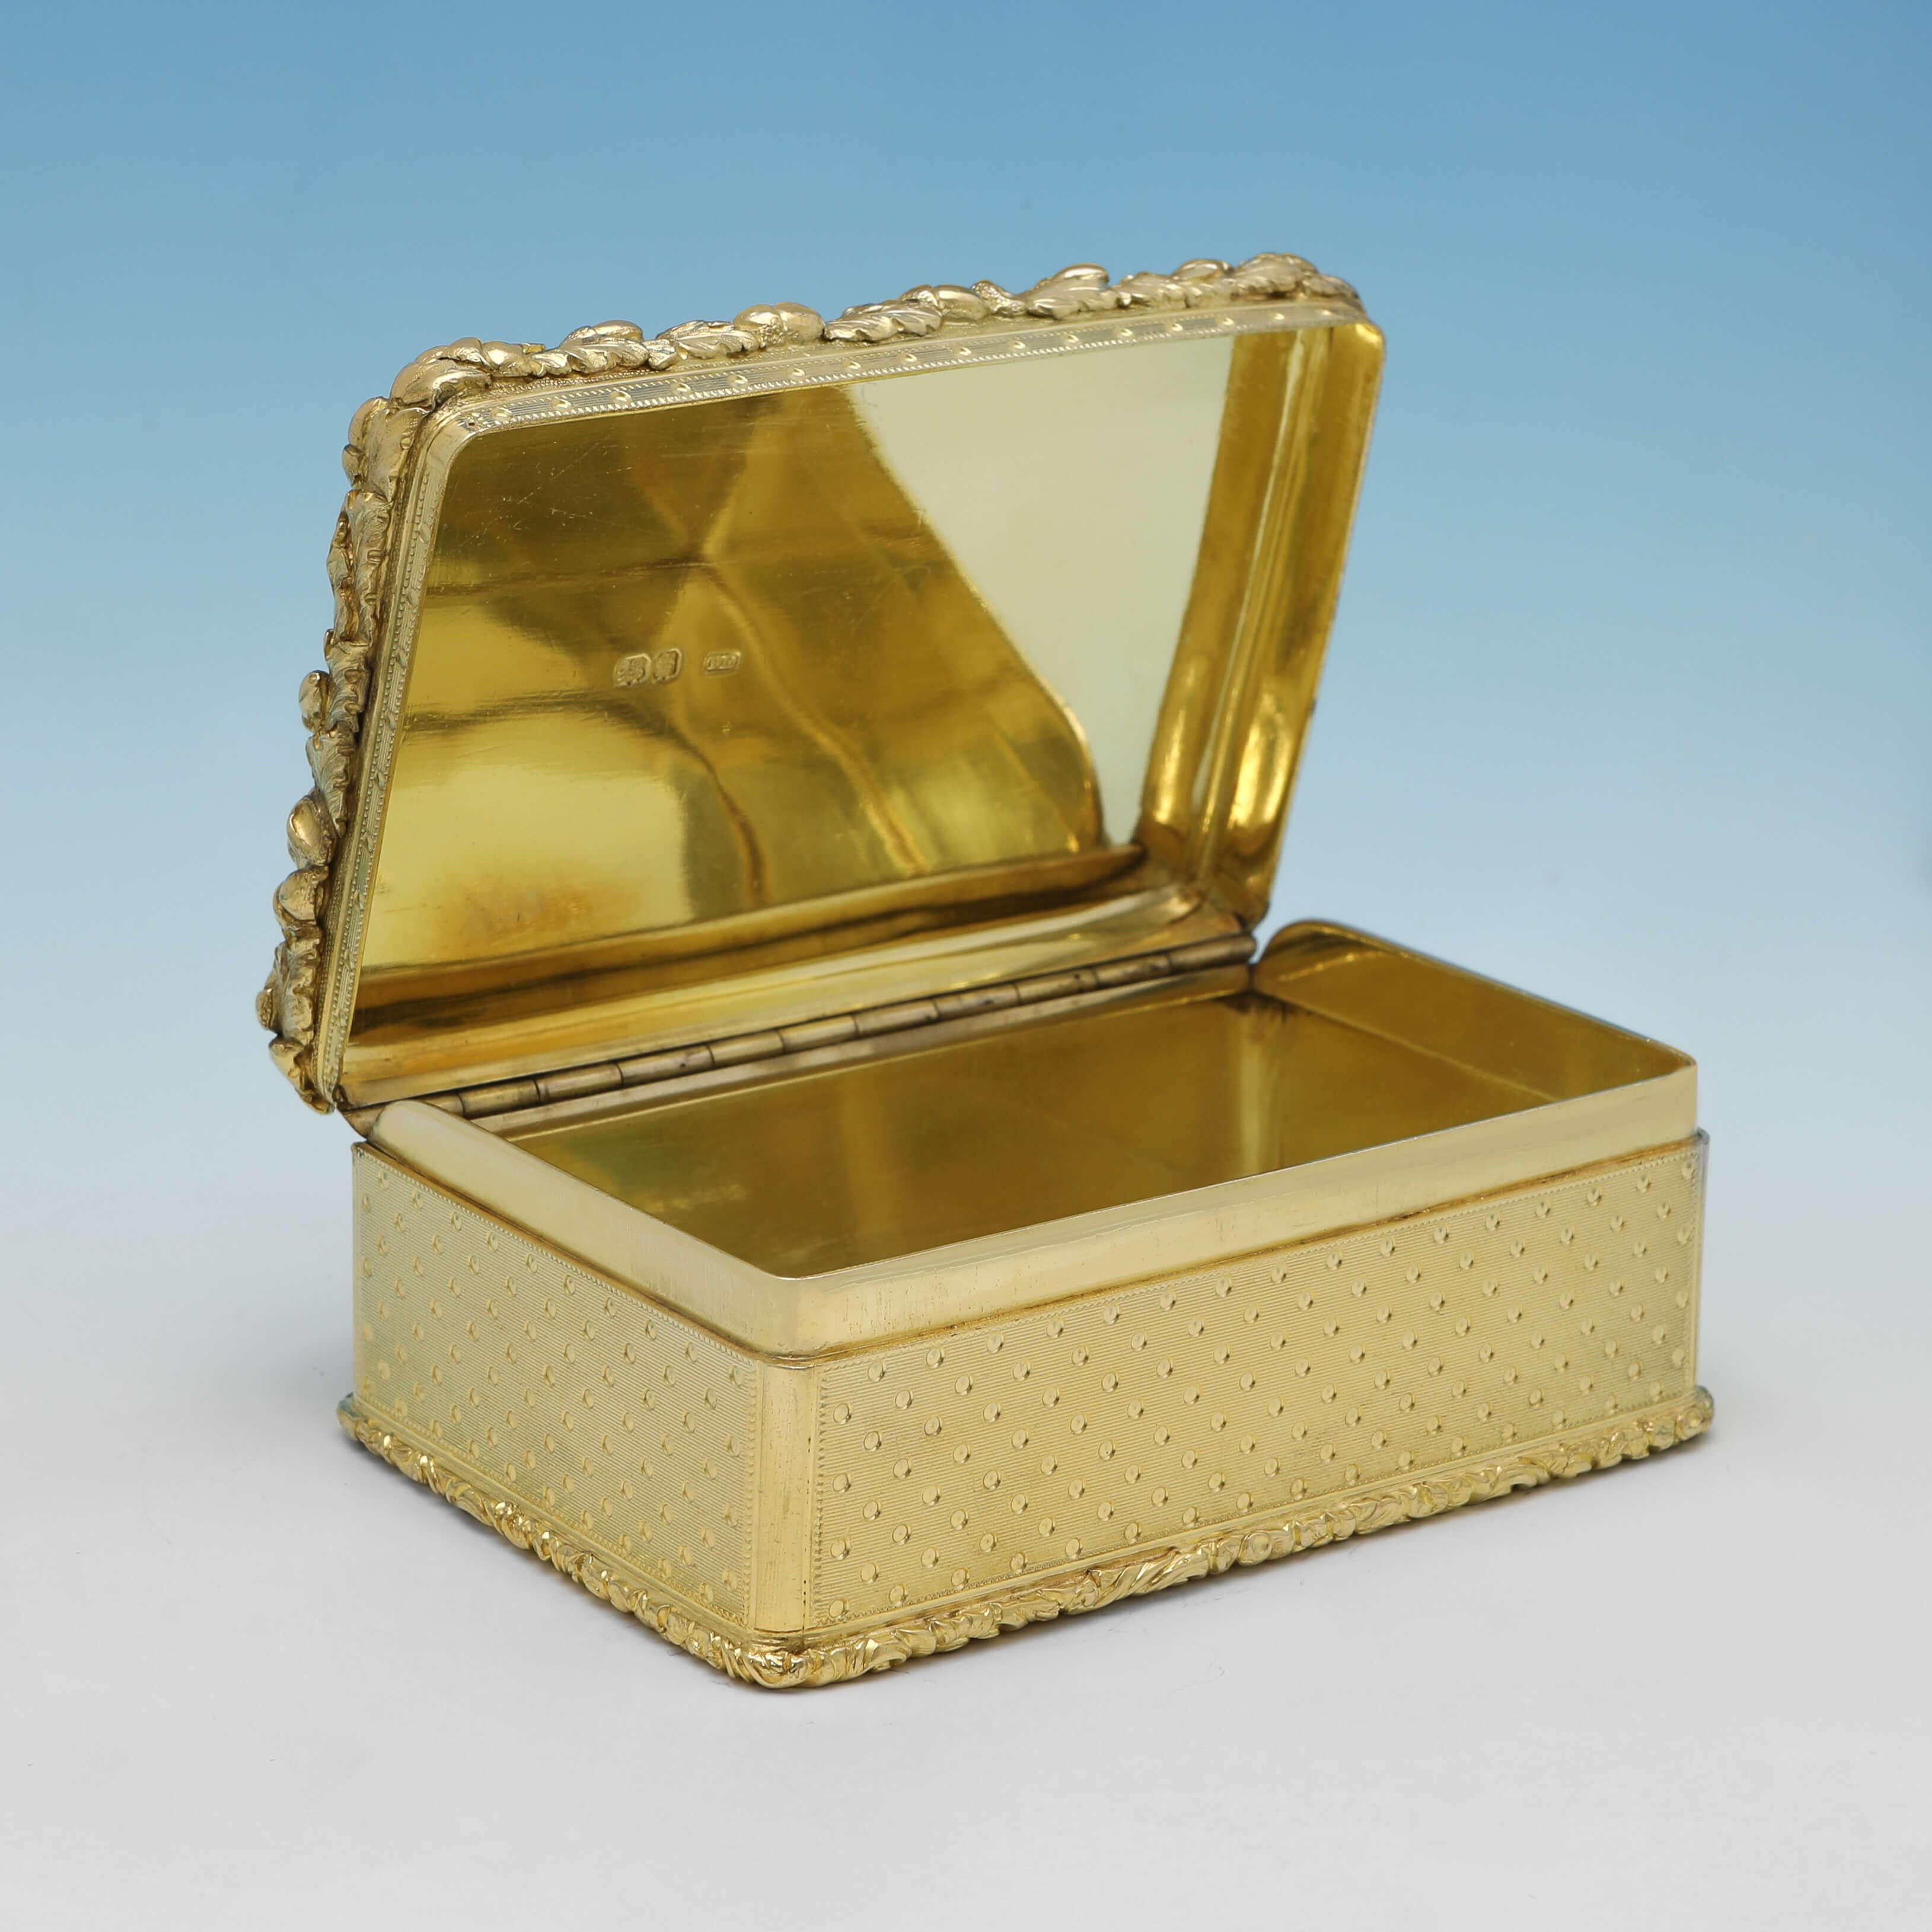 English Stunning Silver Gilt Victorian Table Snuff Box - Hallmarked in London in 1853